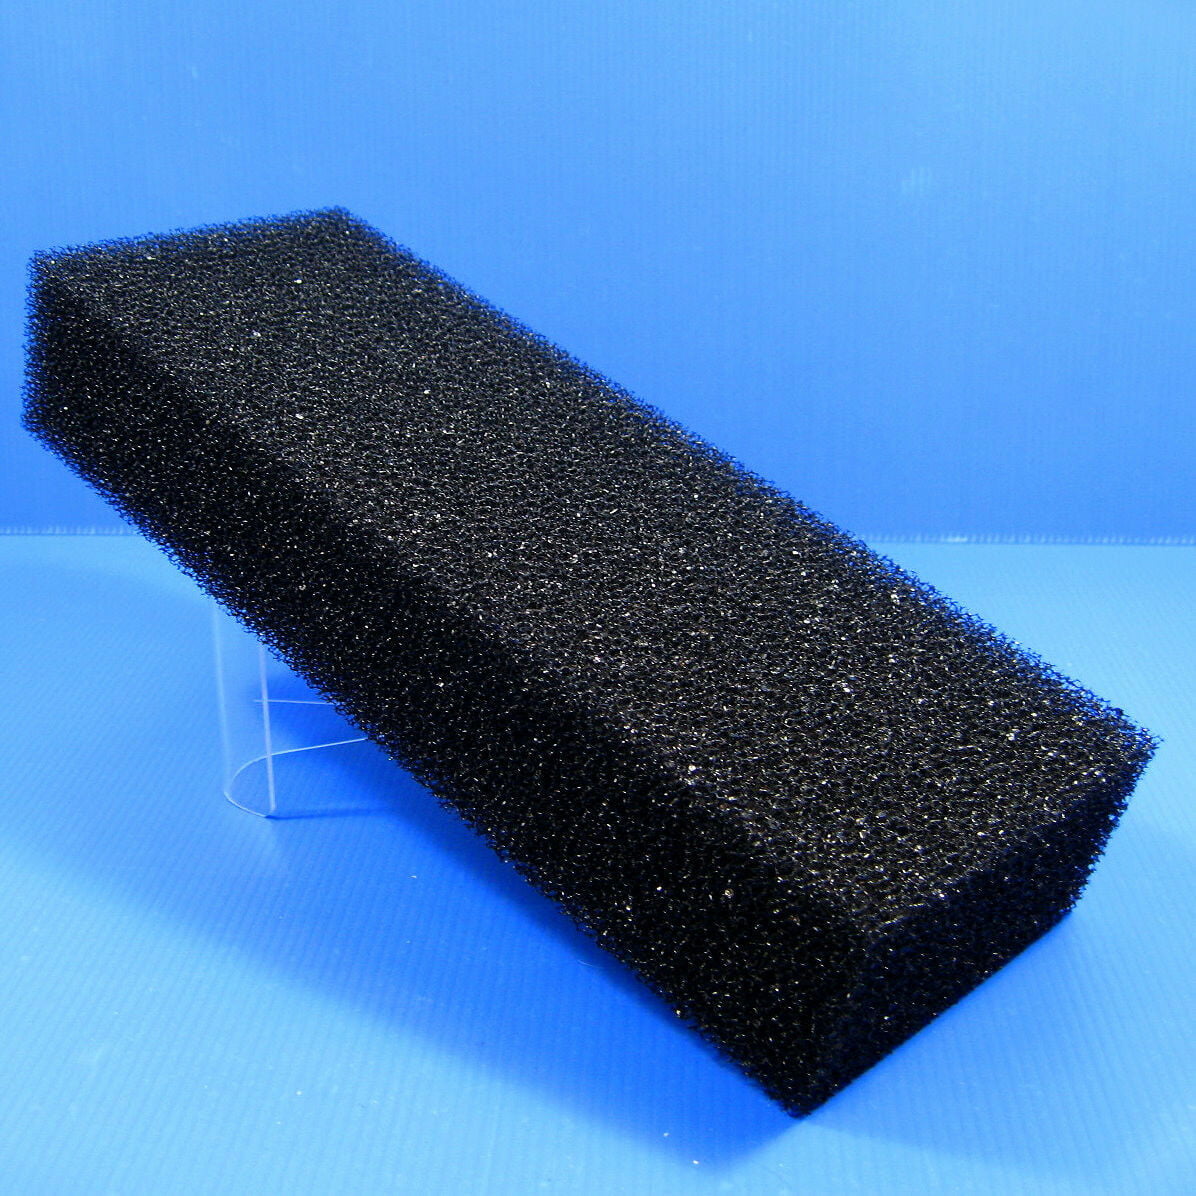 Filter Bio-Sponge 11.8"x4.7"x2.36" Media Block Foam pads Biochemical Sponge bio 